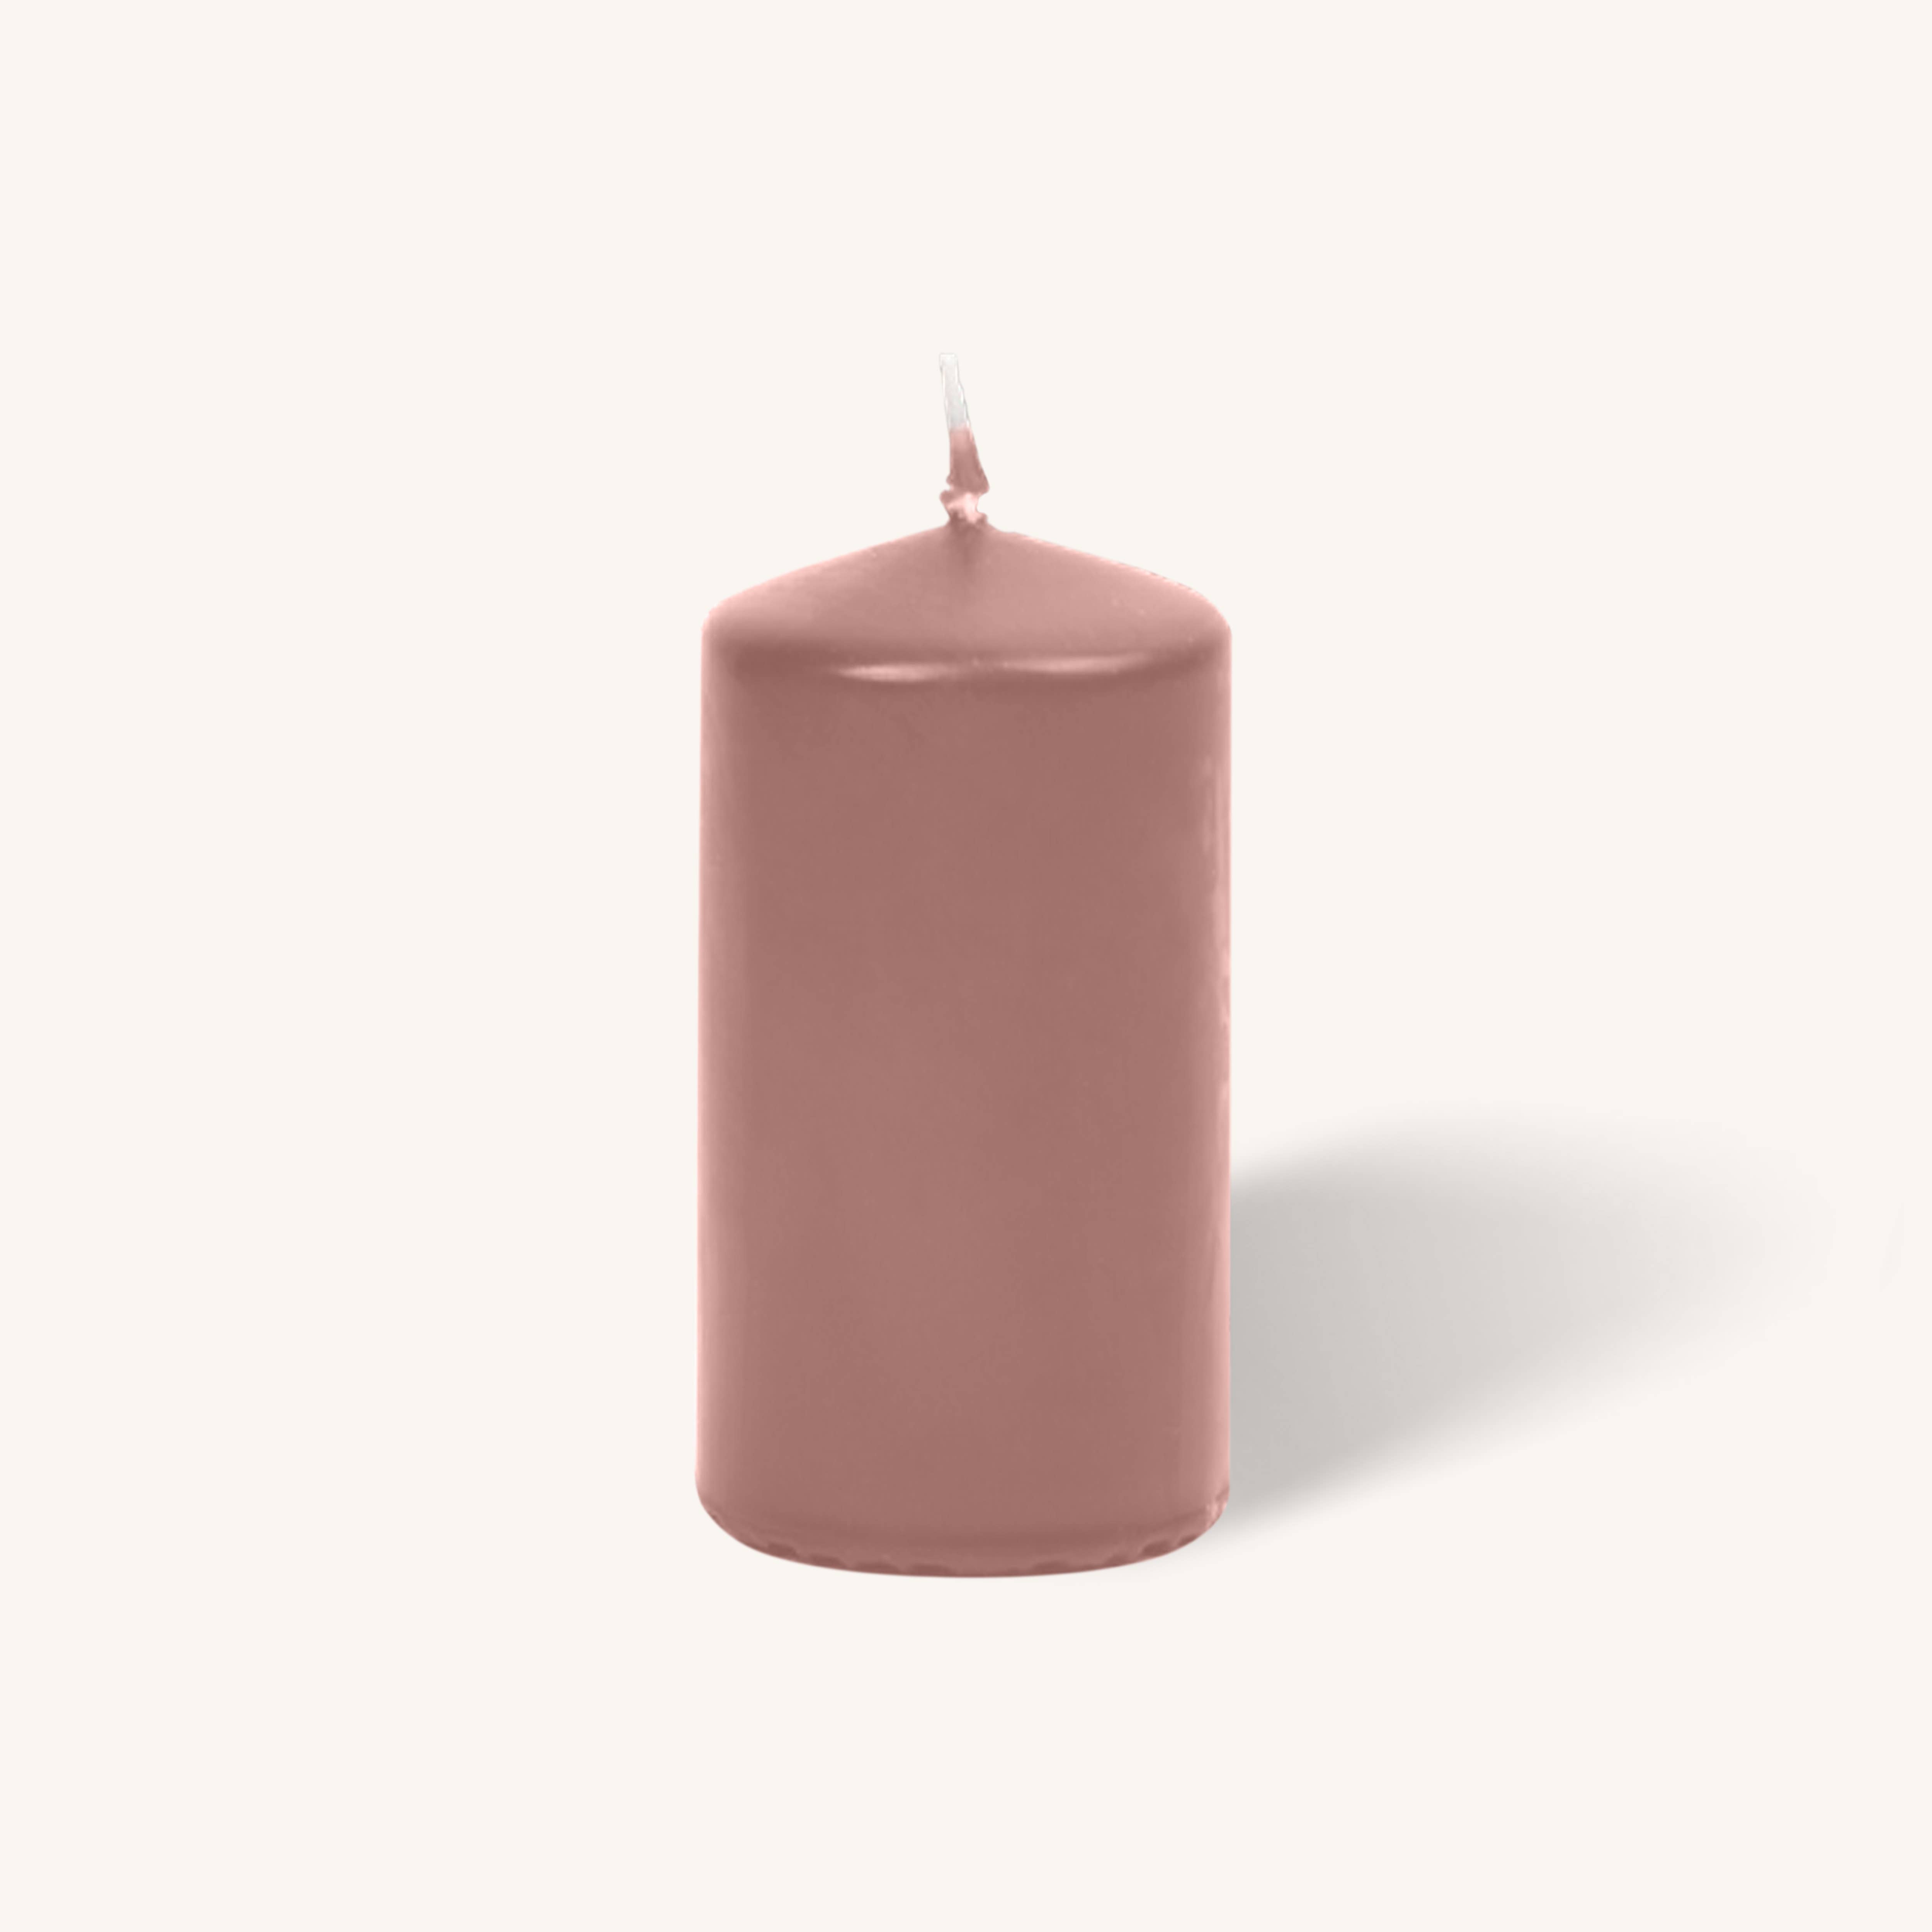 Lavender Pillar Candles - 2" x 4" - 4 Pack